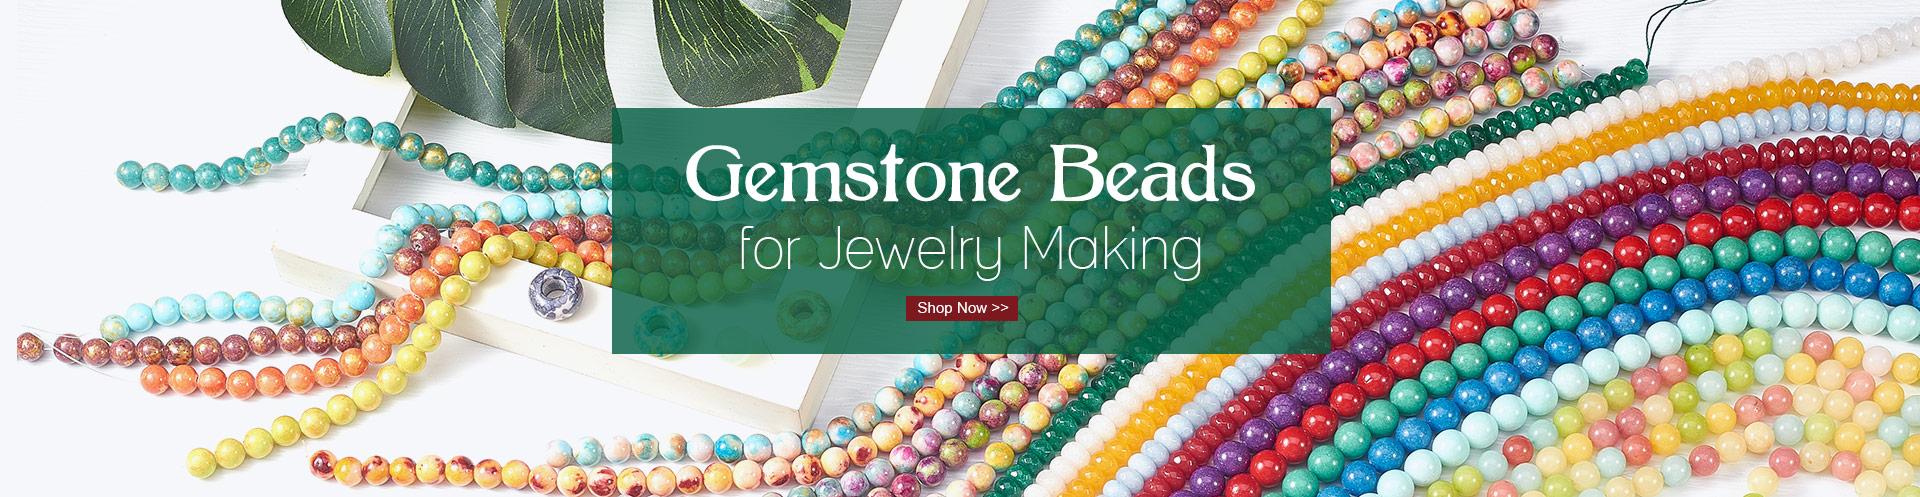 Gemstone Beads for Jewelry Making